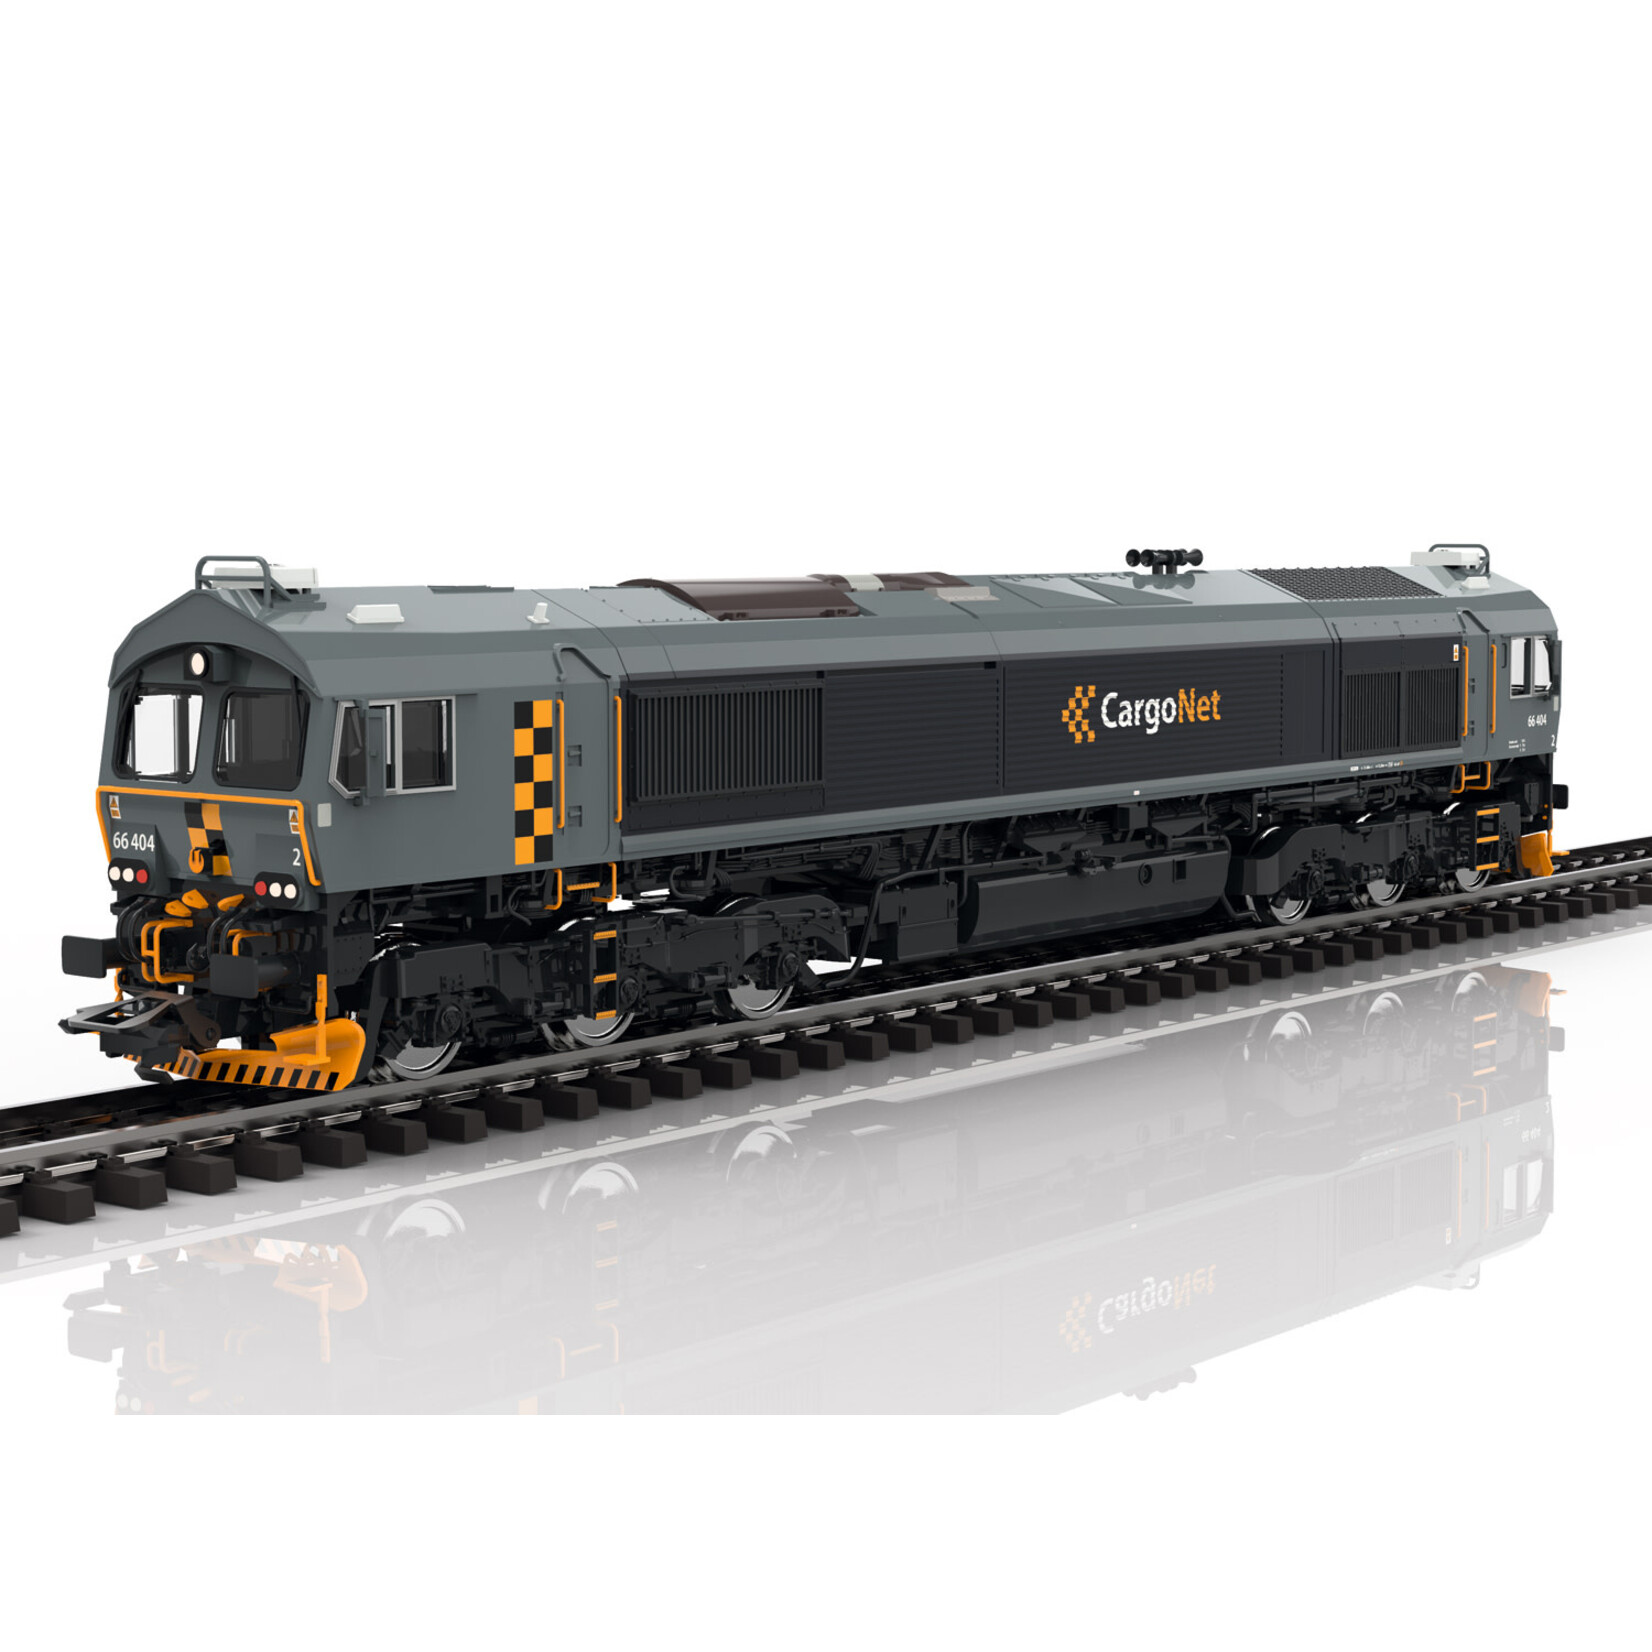 Trix Trix H0 22694 Class 66 CargoNet Diesel Locomotive